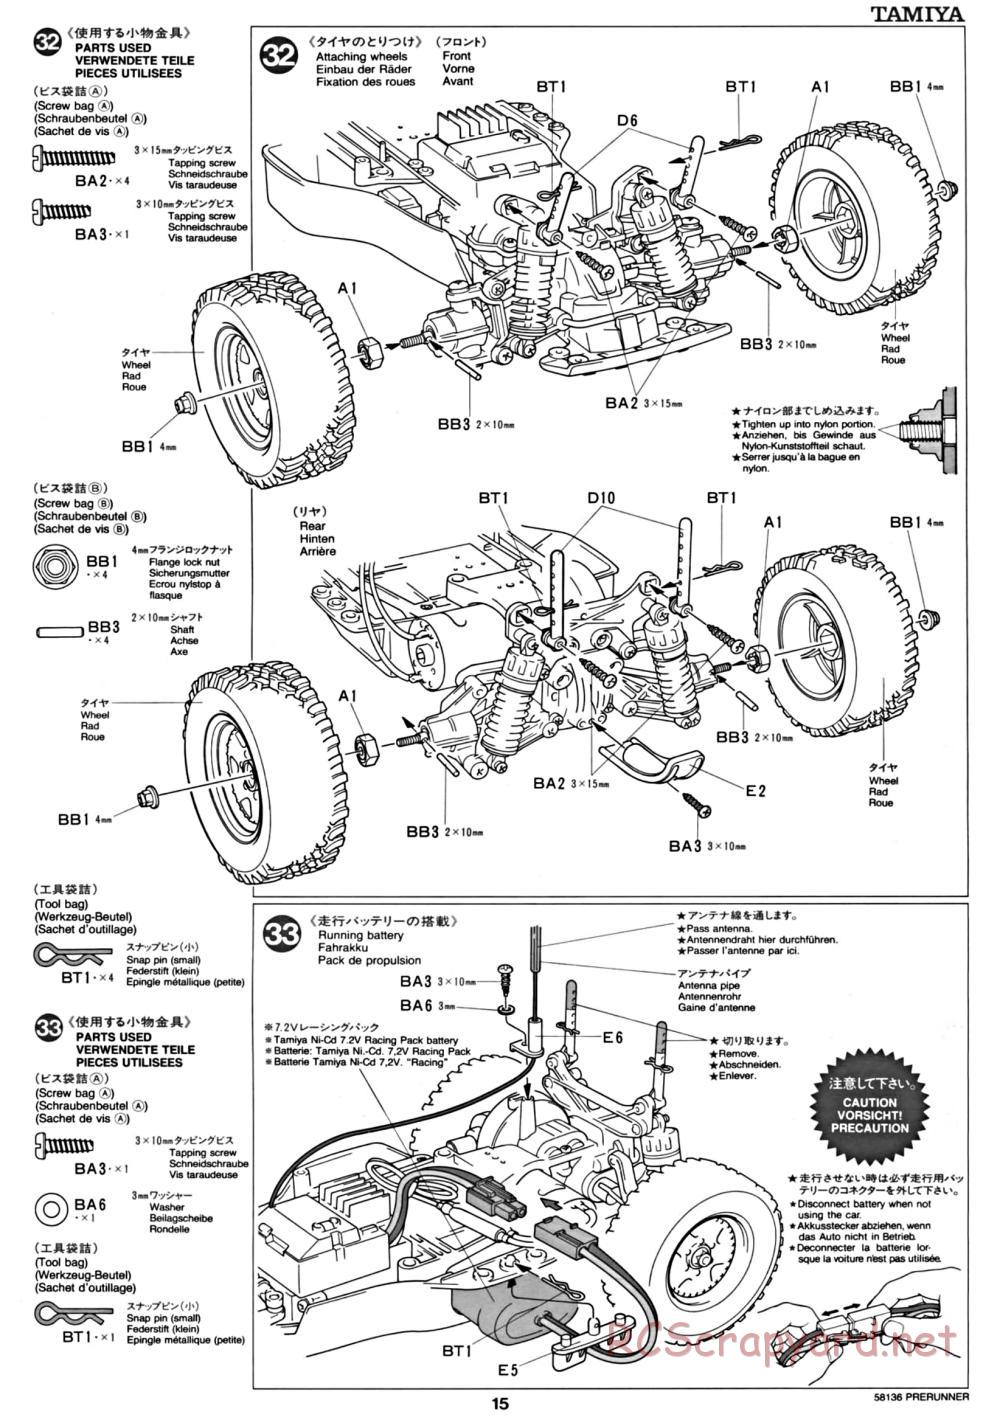 Tamiya - Toyota Prerunner Chassis - Manual - Page 15